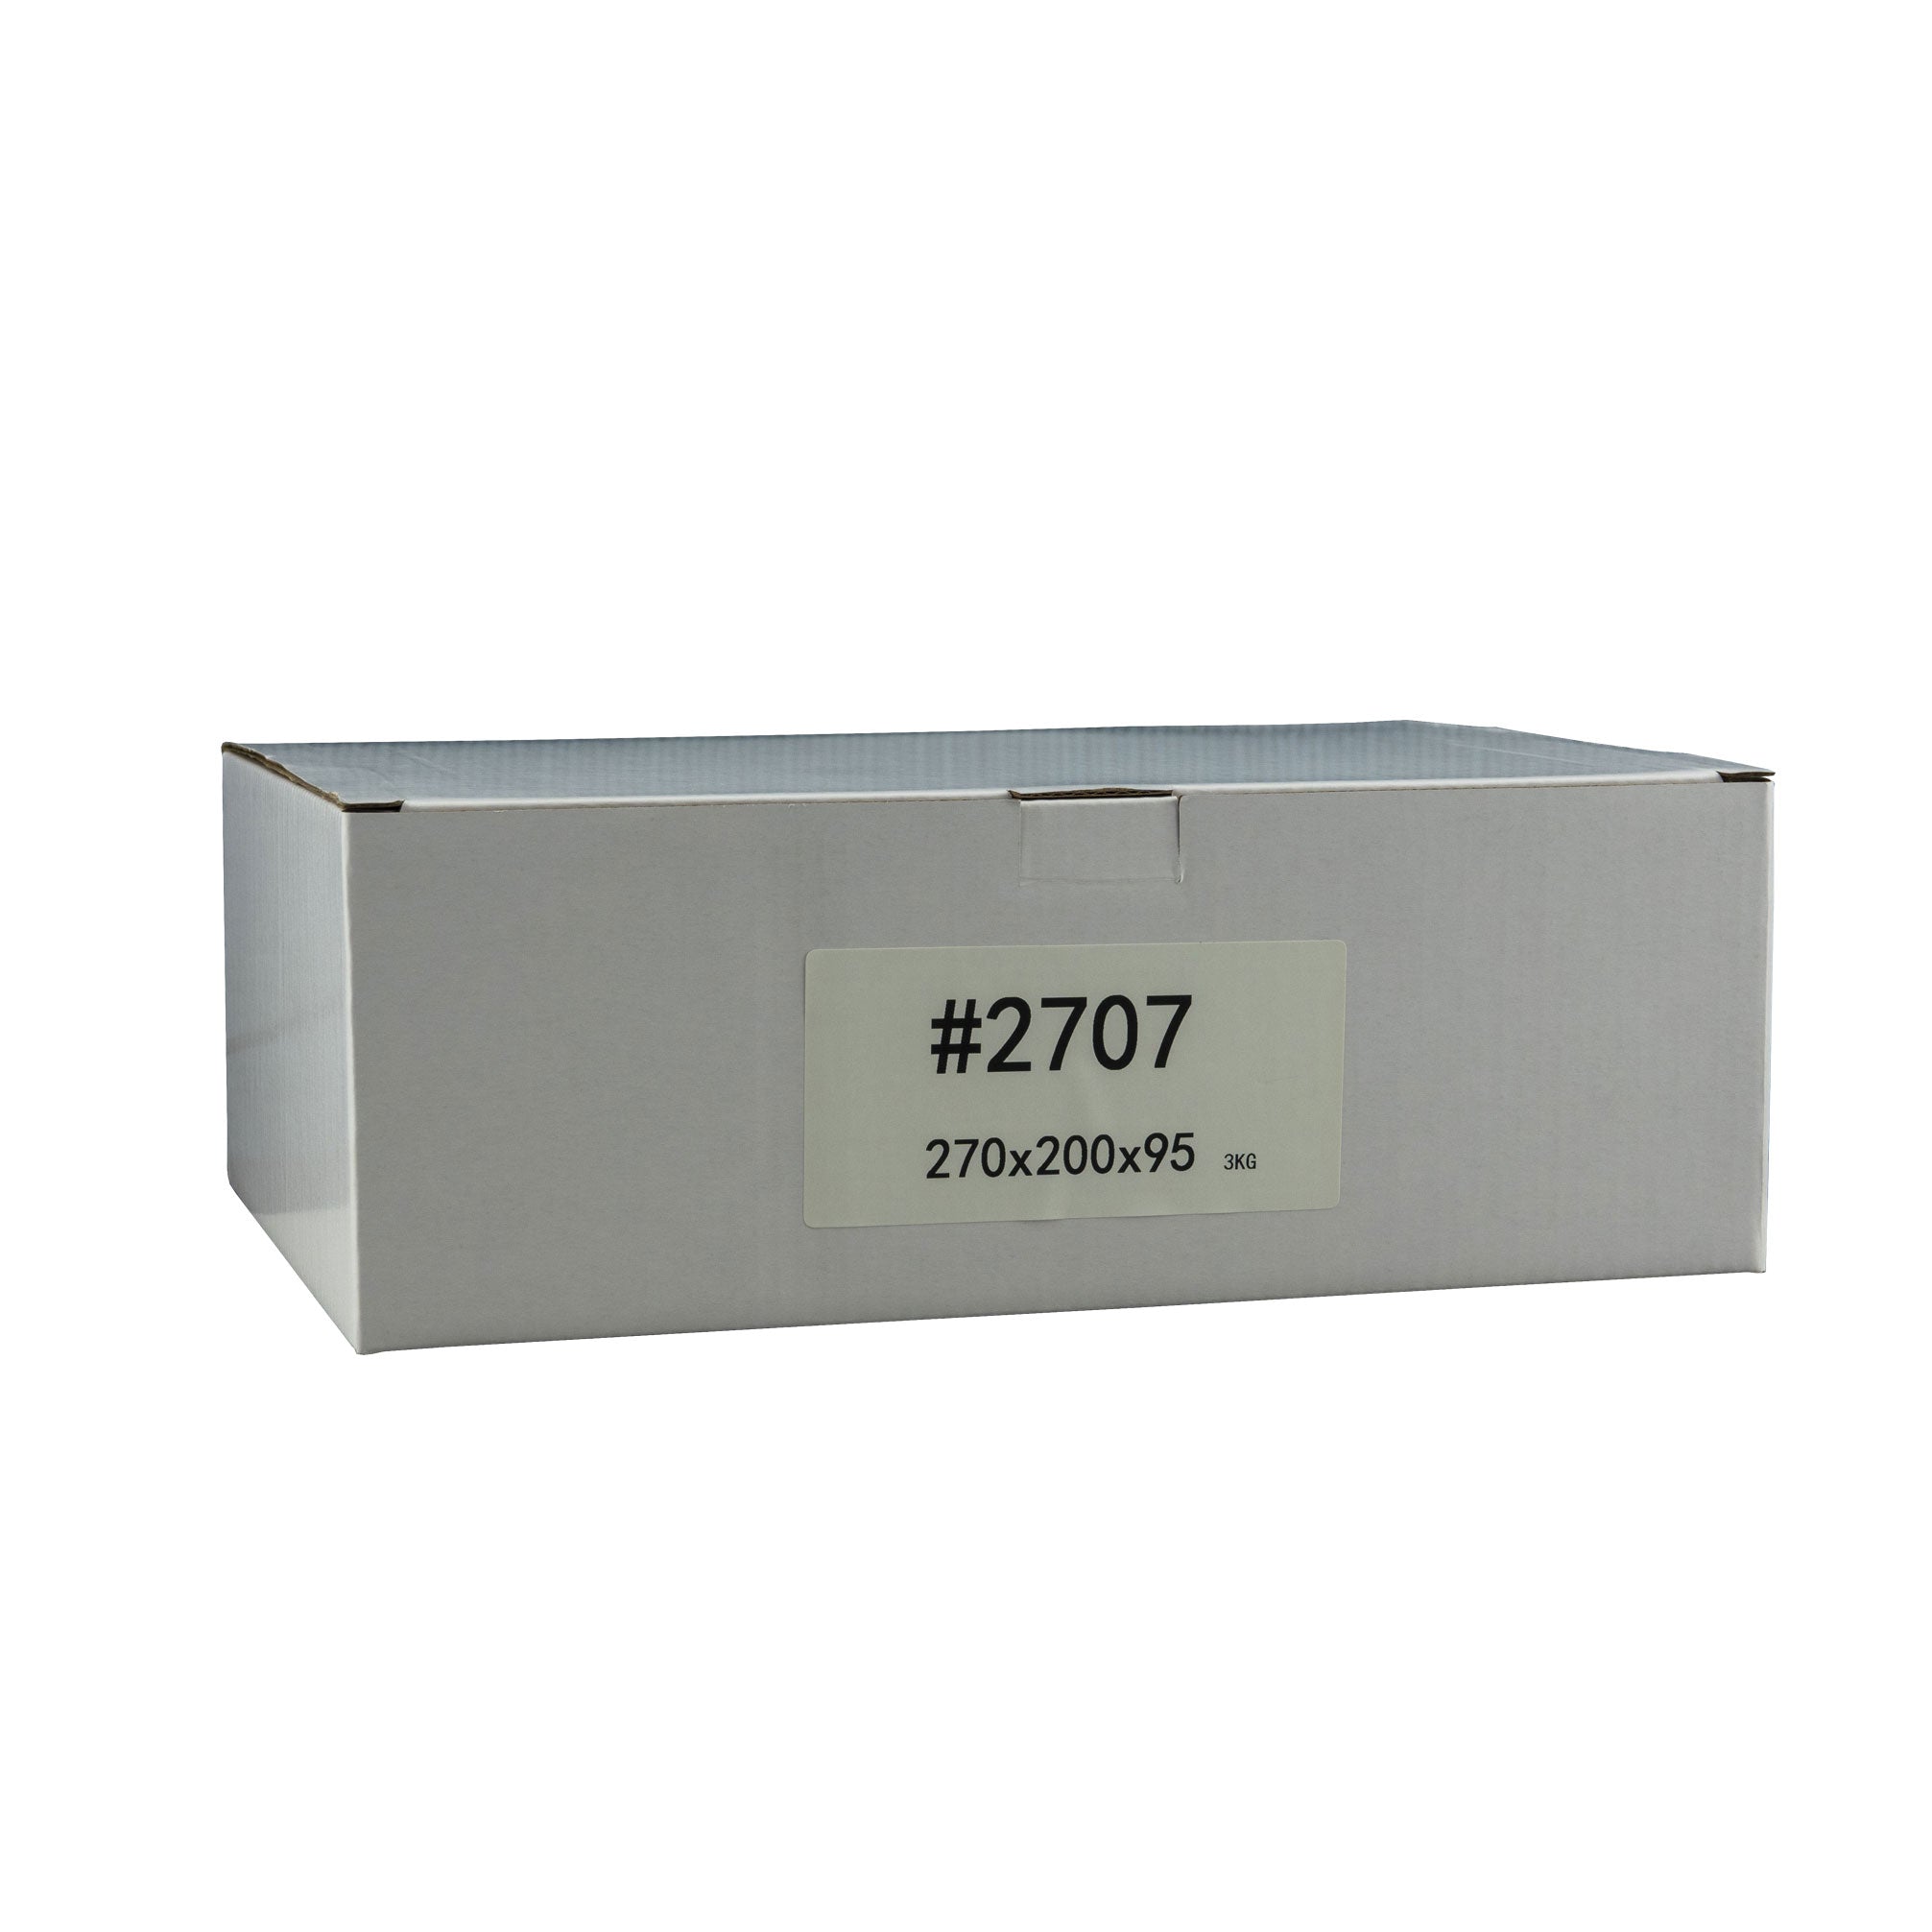 100mm x 75mm x 50mm White Carton Cardboard Shipping Box (#2707) for 3KG satchel